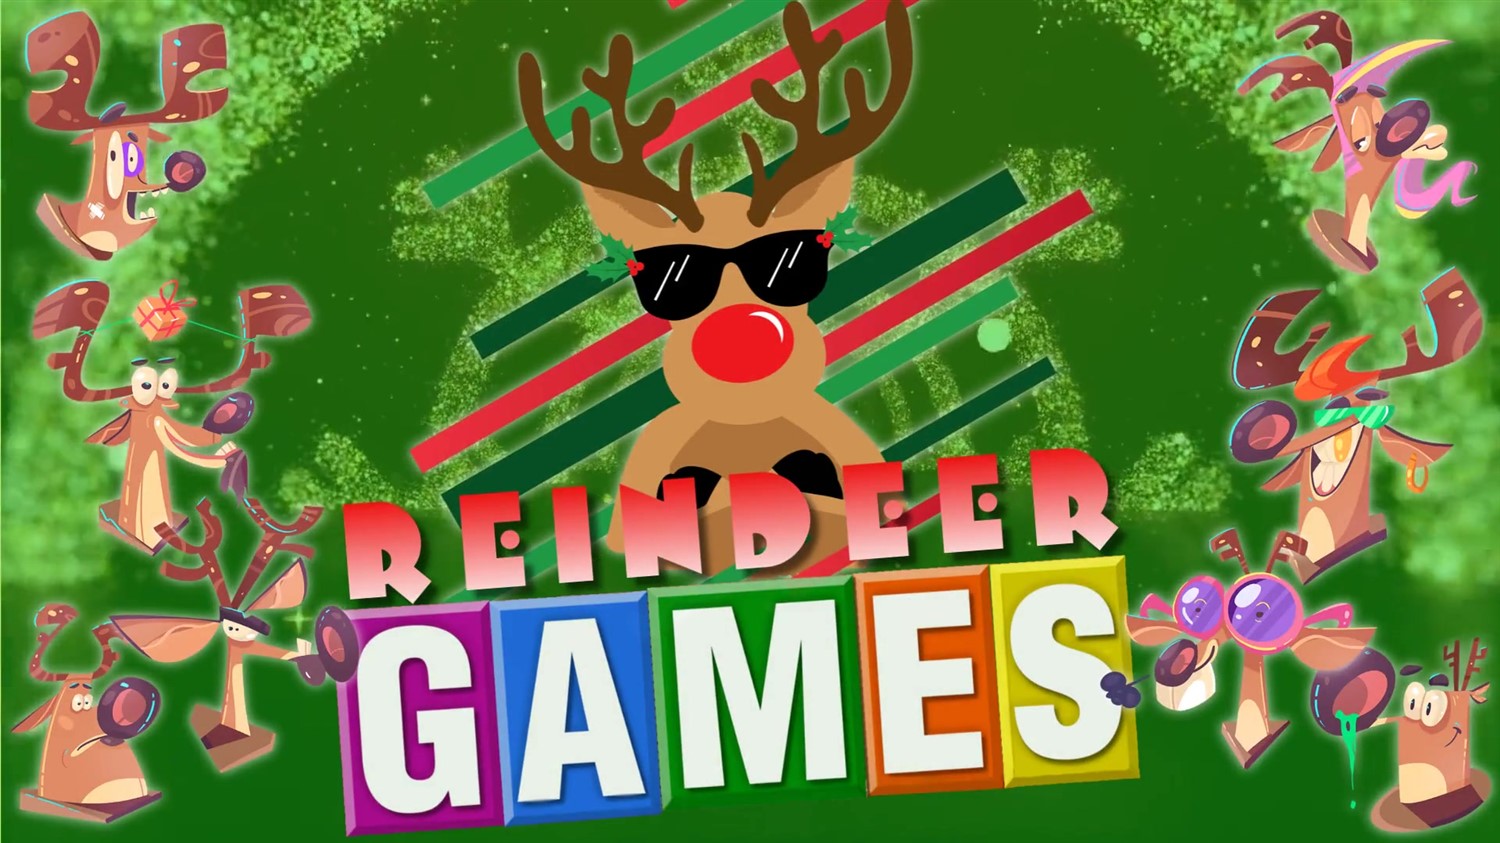 REINDEER GAMES Fun Holiday Game Show for All Ages on dic. 03, 20:00@FFX Theatre - Elegir asientoCompra entradas y obtén información enFamily Fun Xperience tickets.ffxshow.org